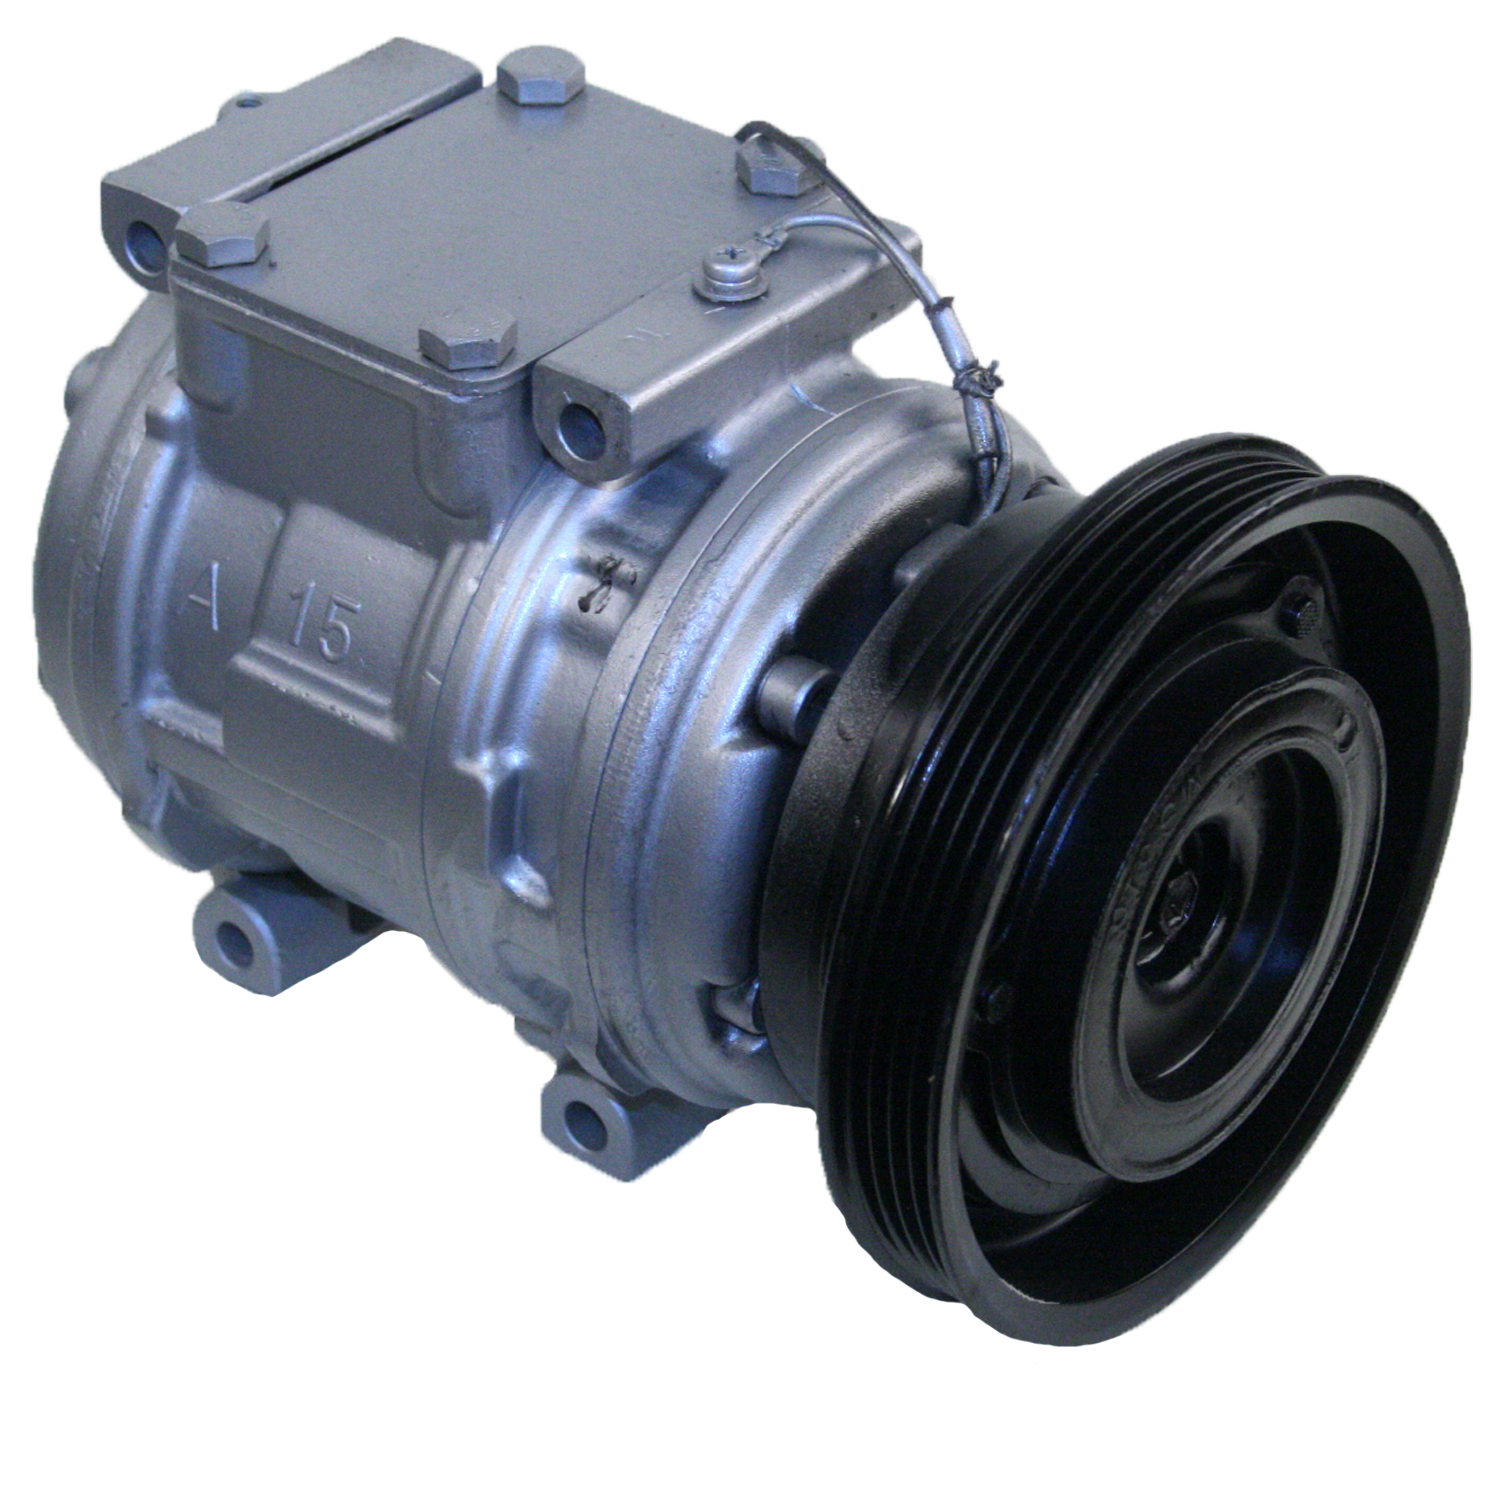 TCW Compressor 31210.408 Remanufactured Product Image field_60b6a13a6e67c